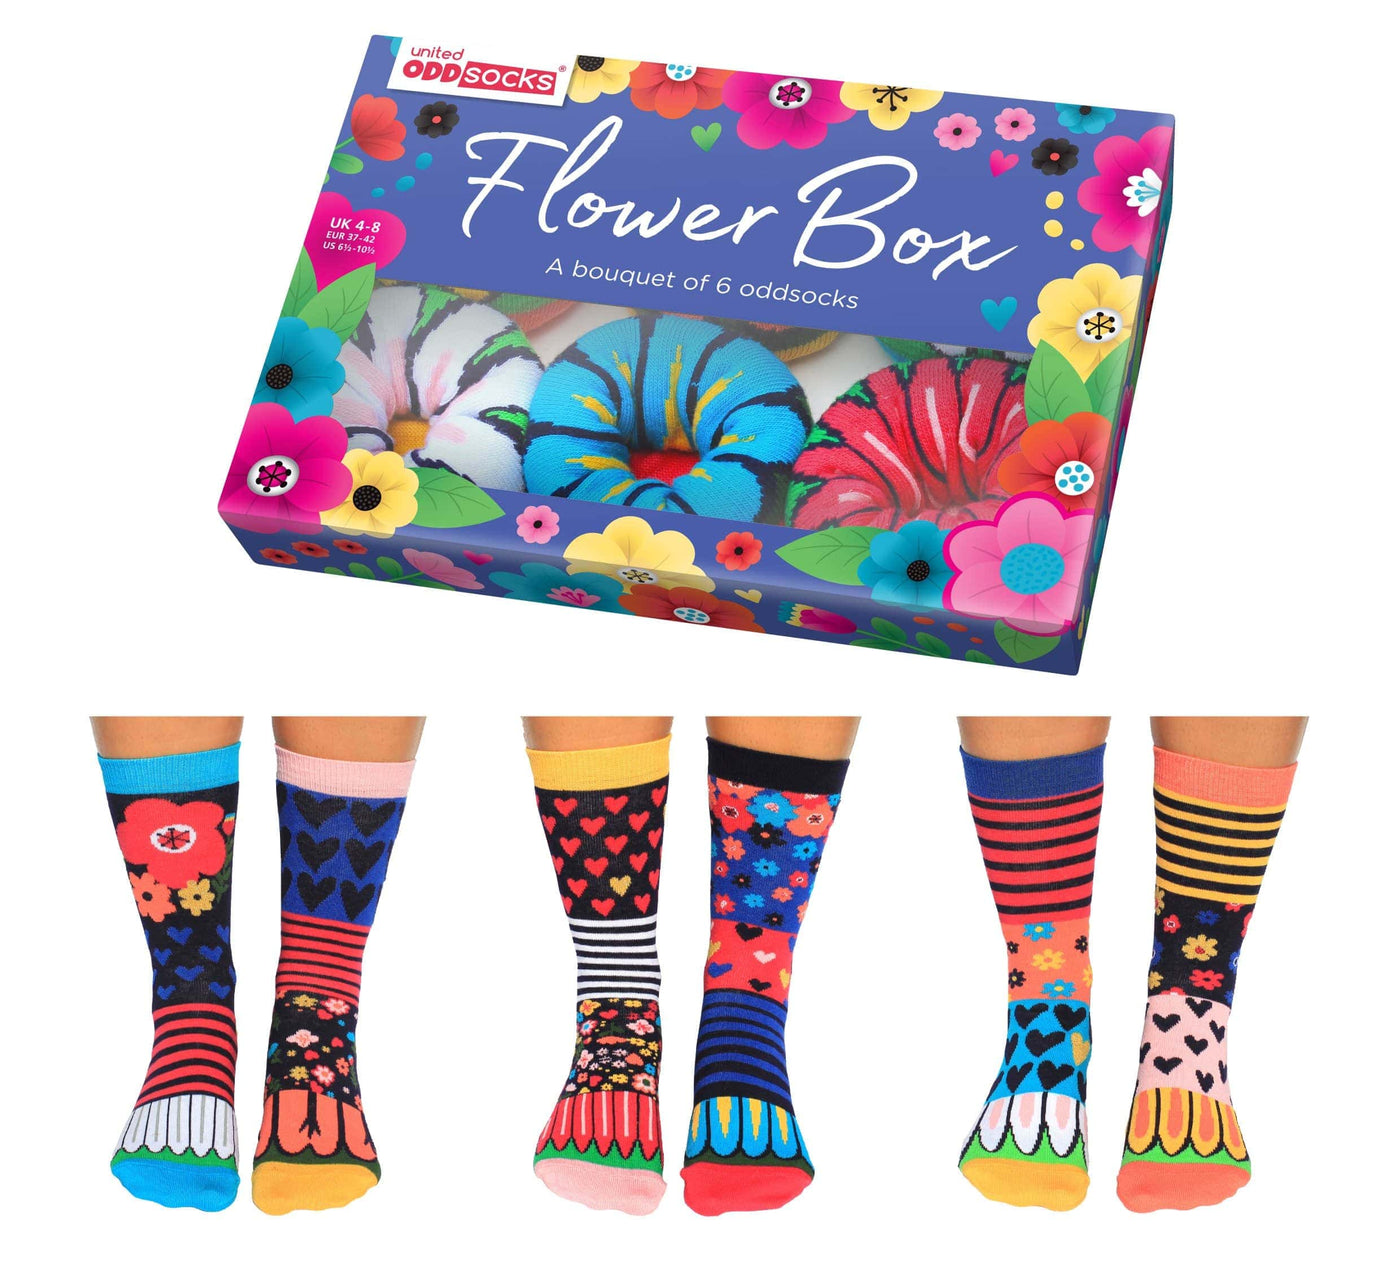 United Odd Socks Socks Flower Box 6 Oddsocks